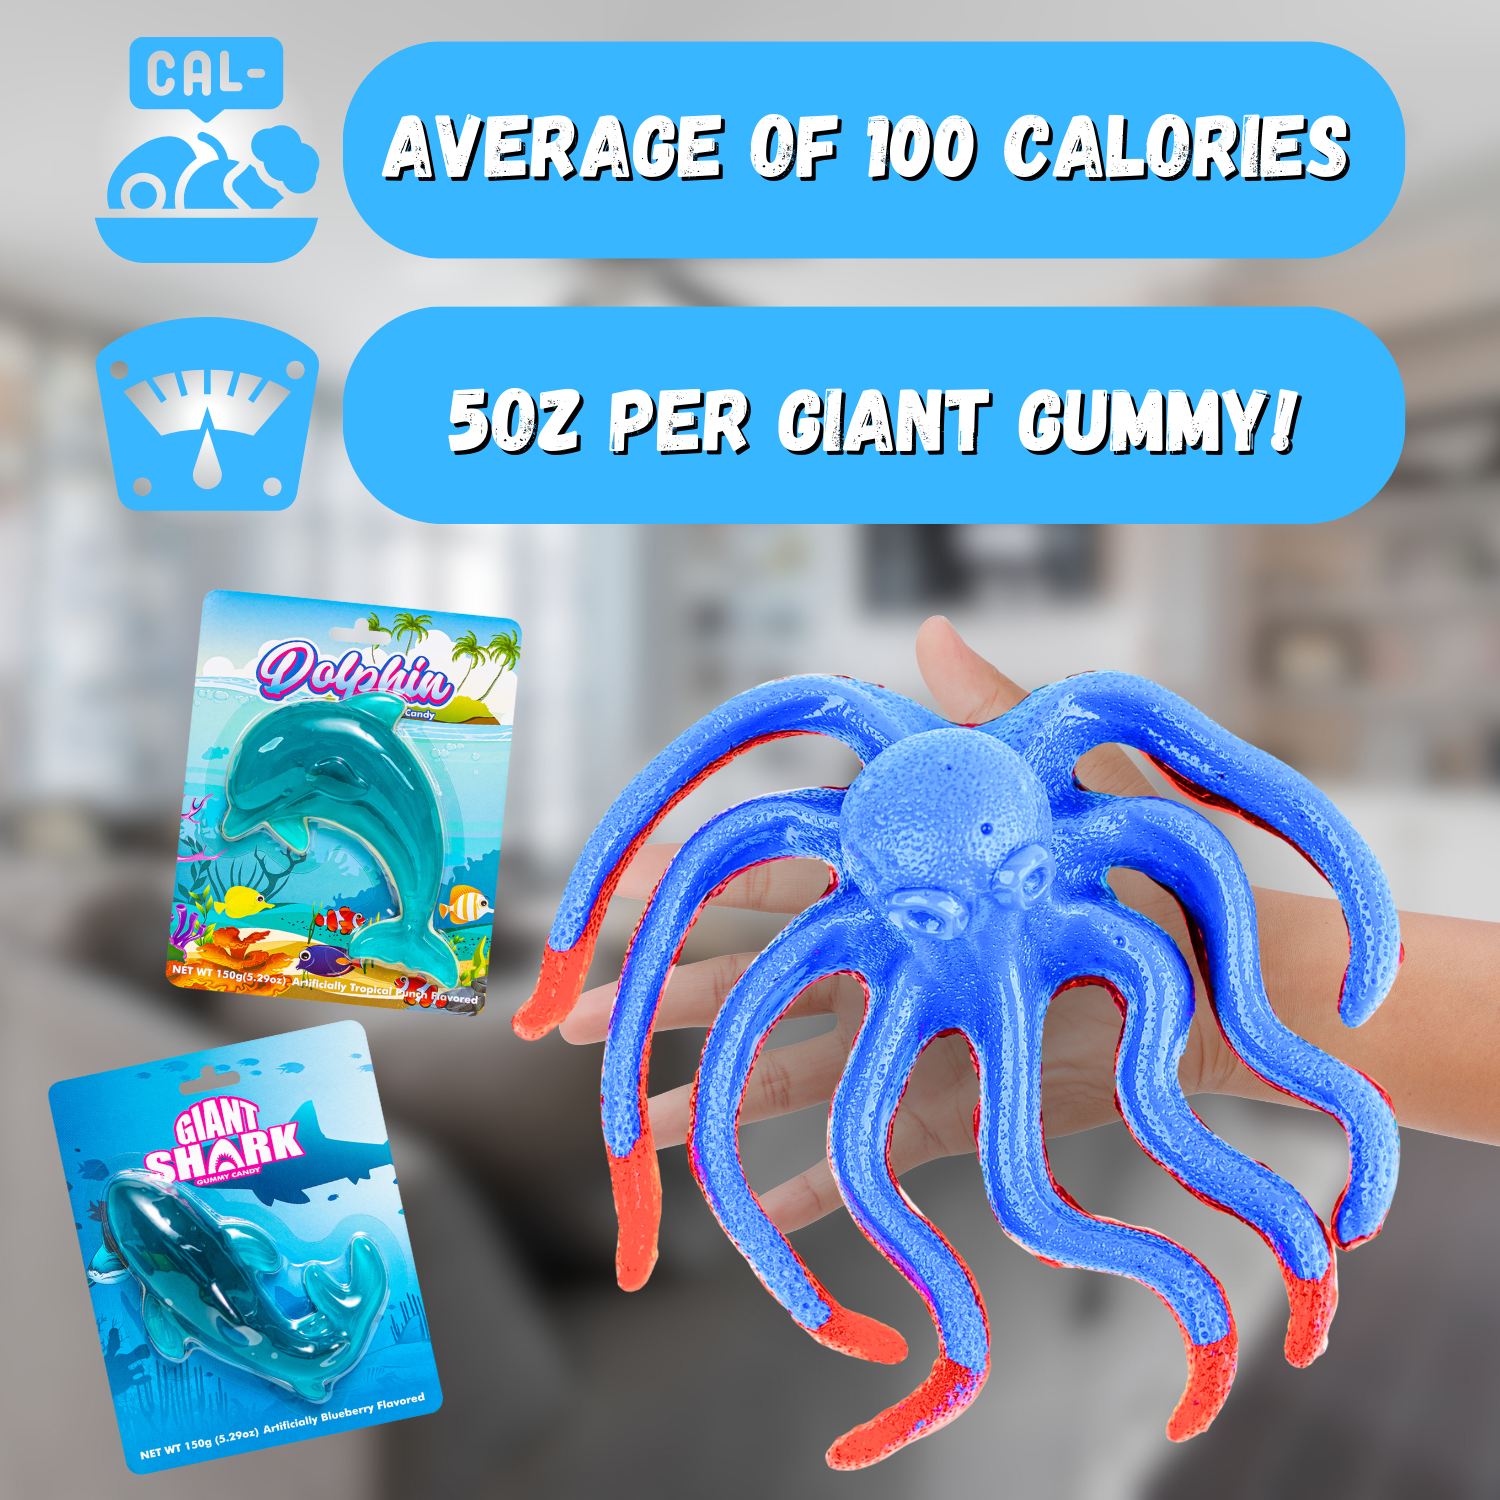 Giant Gummy Octopus - 5oz